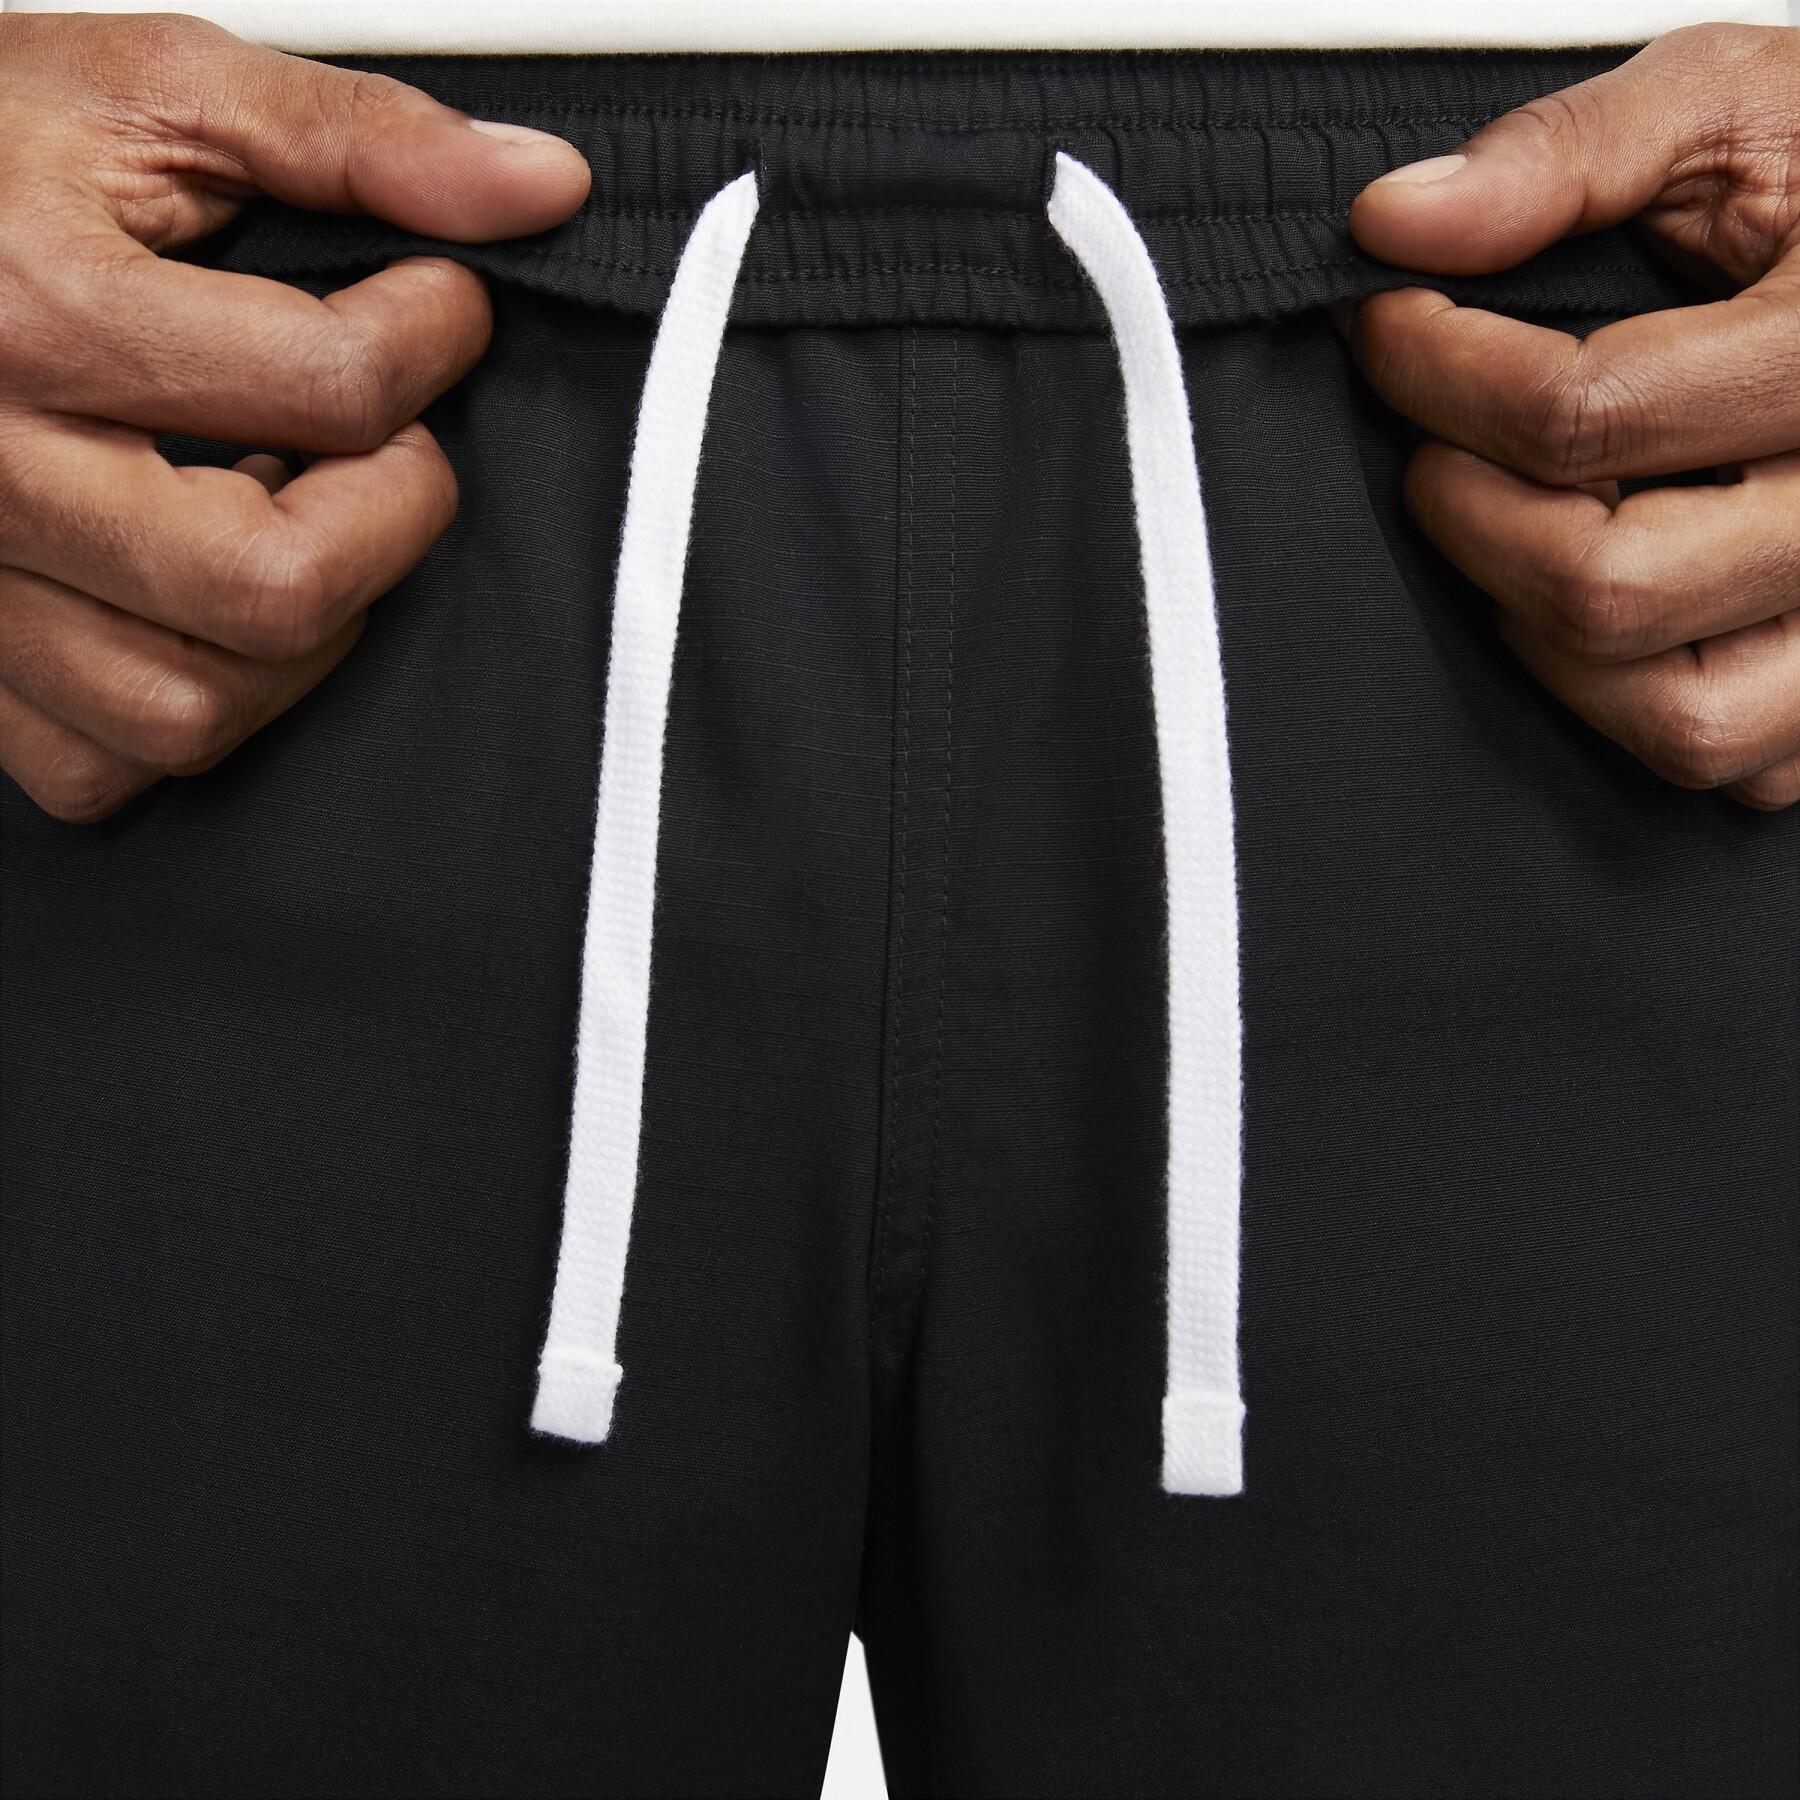 Pants cargo woven Nike Club